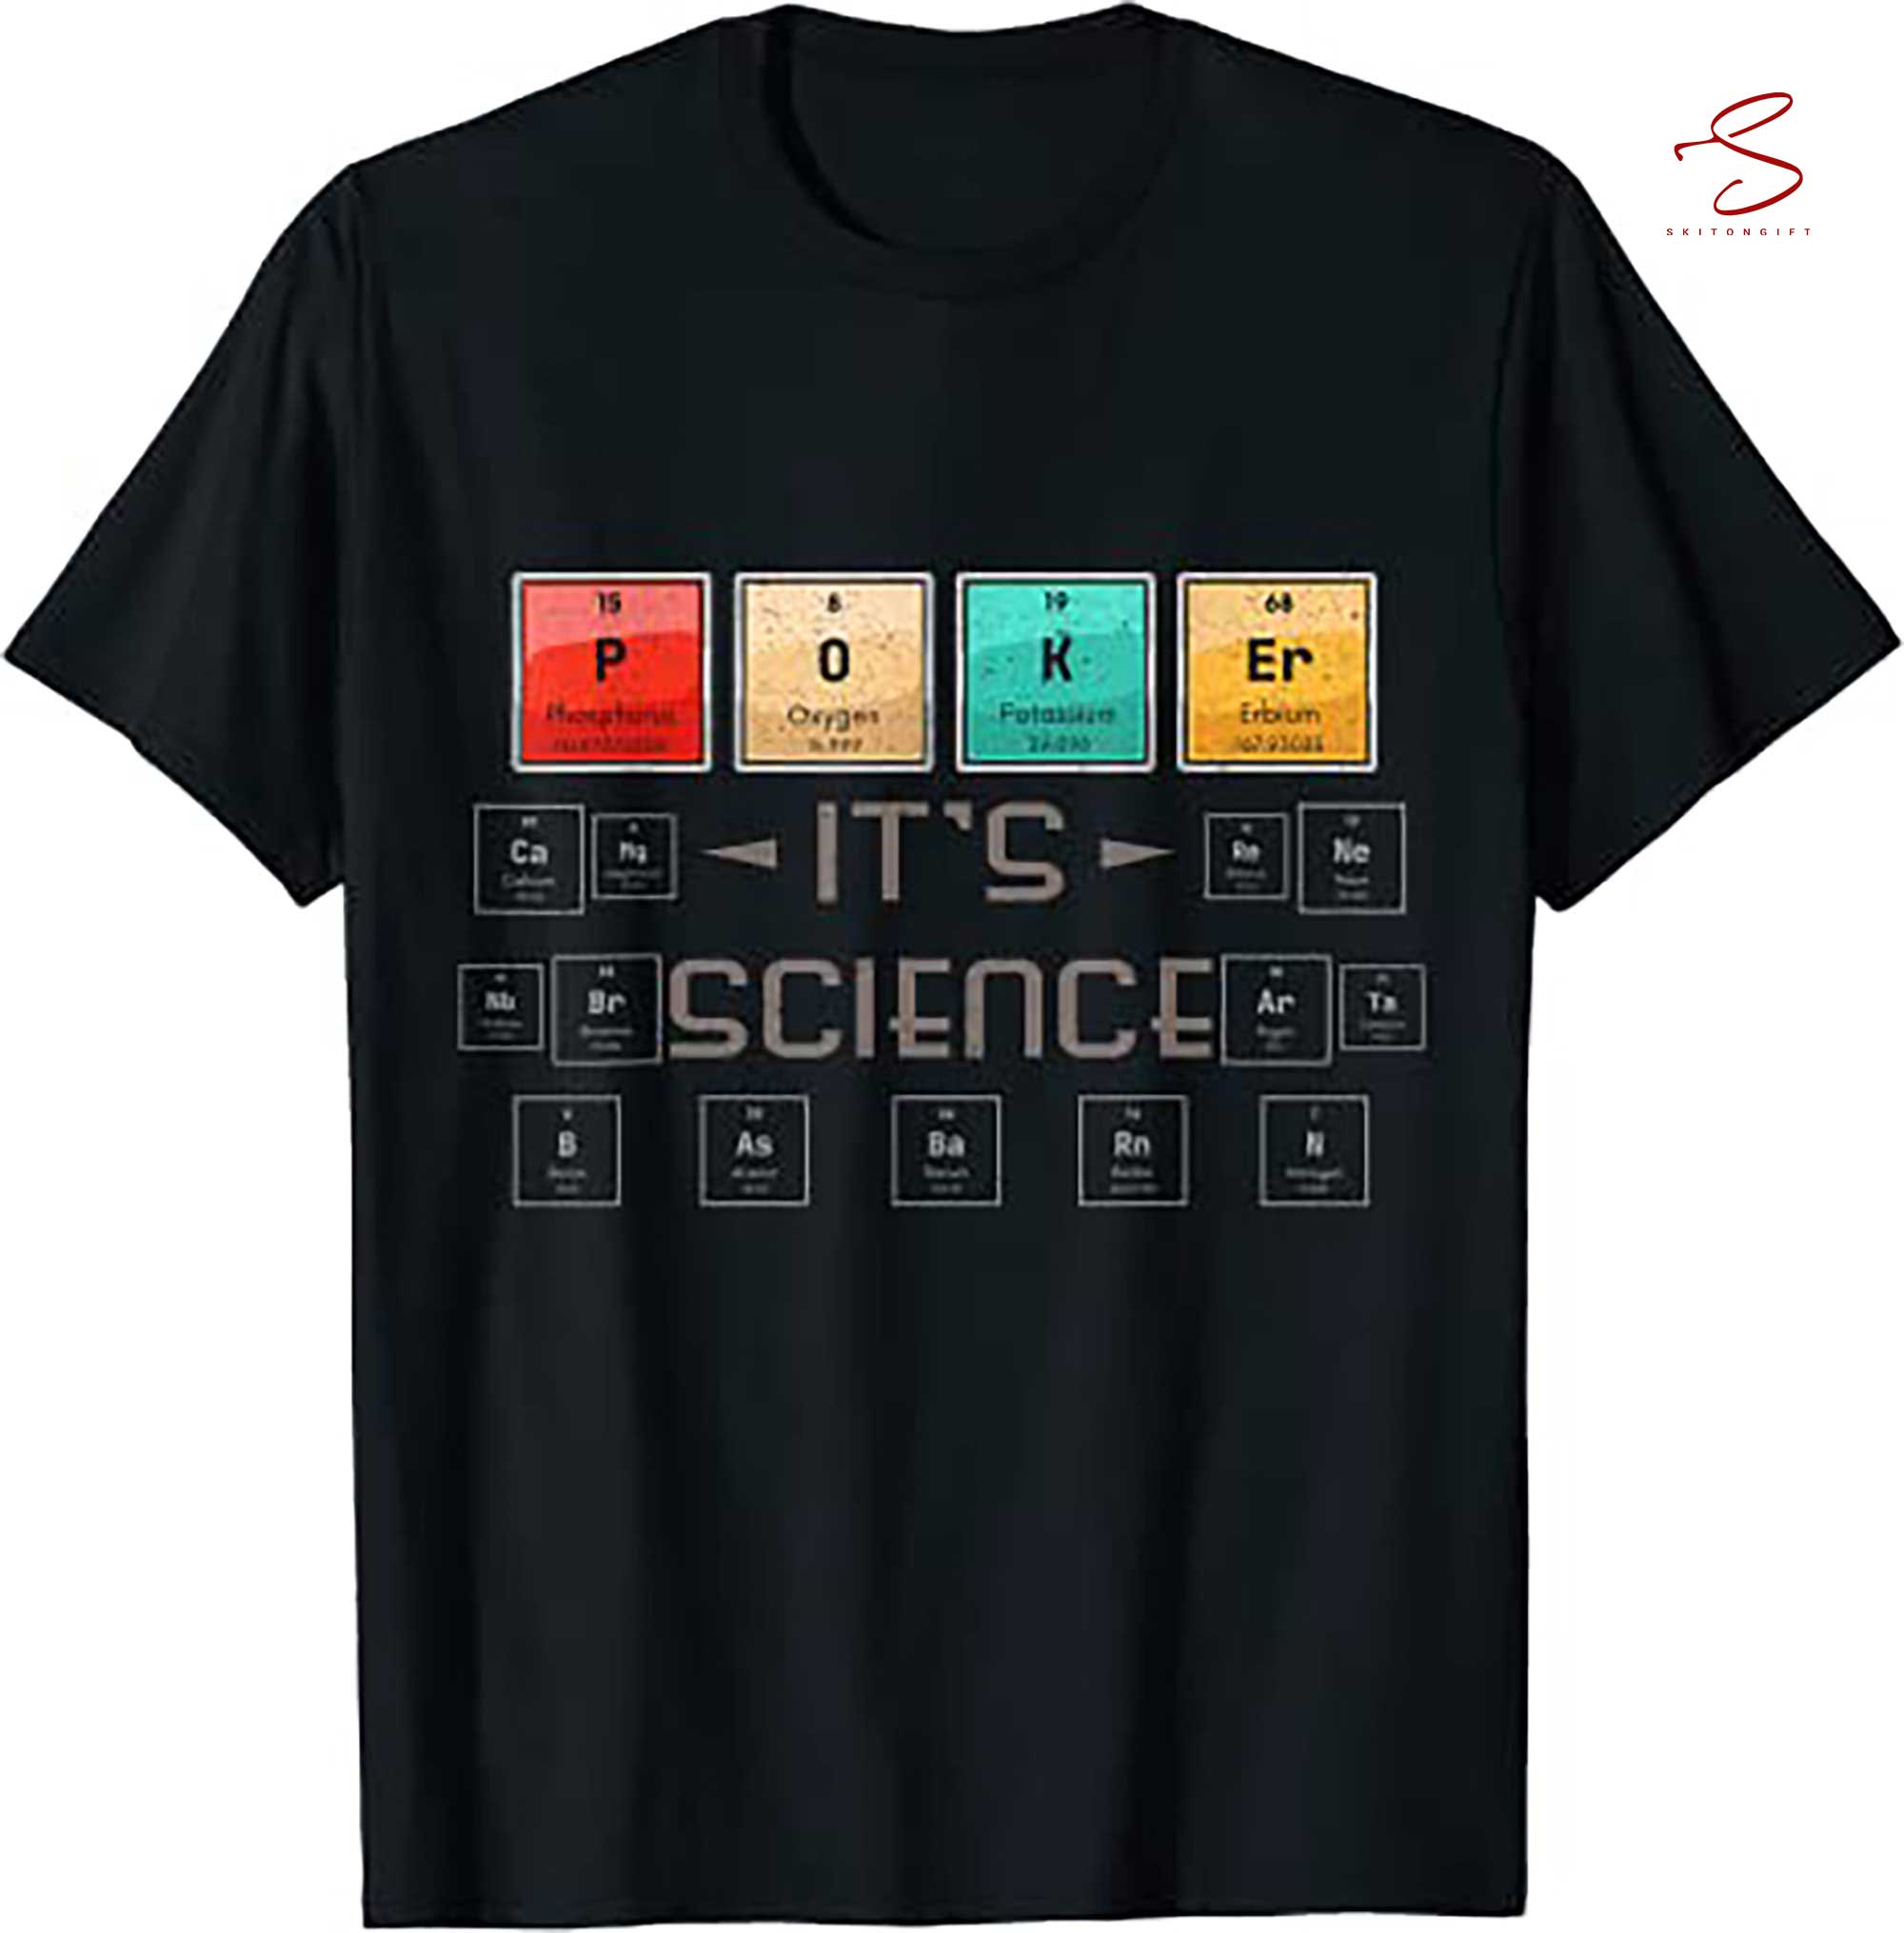 Skitongift Poker ItS Science Casino Lover Poker Bluff Card Game T Shirt